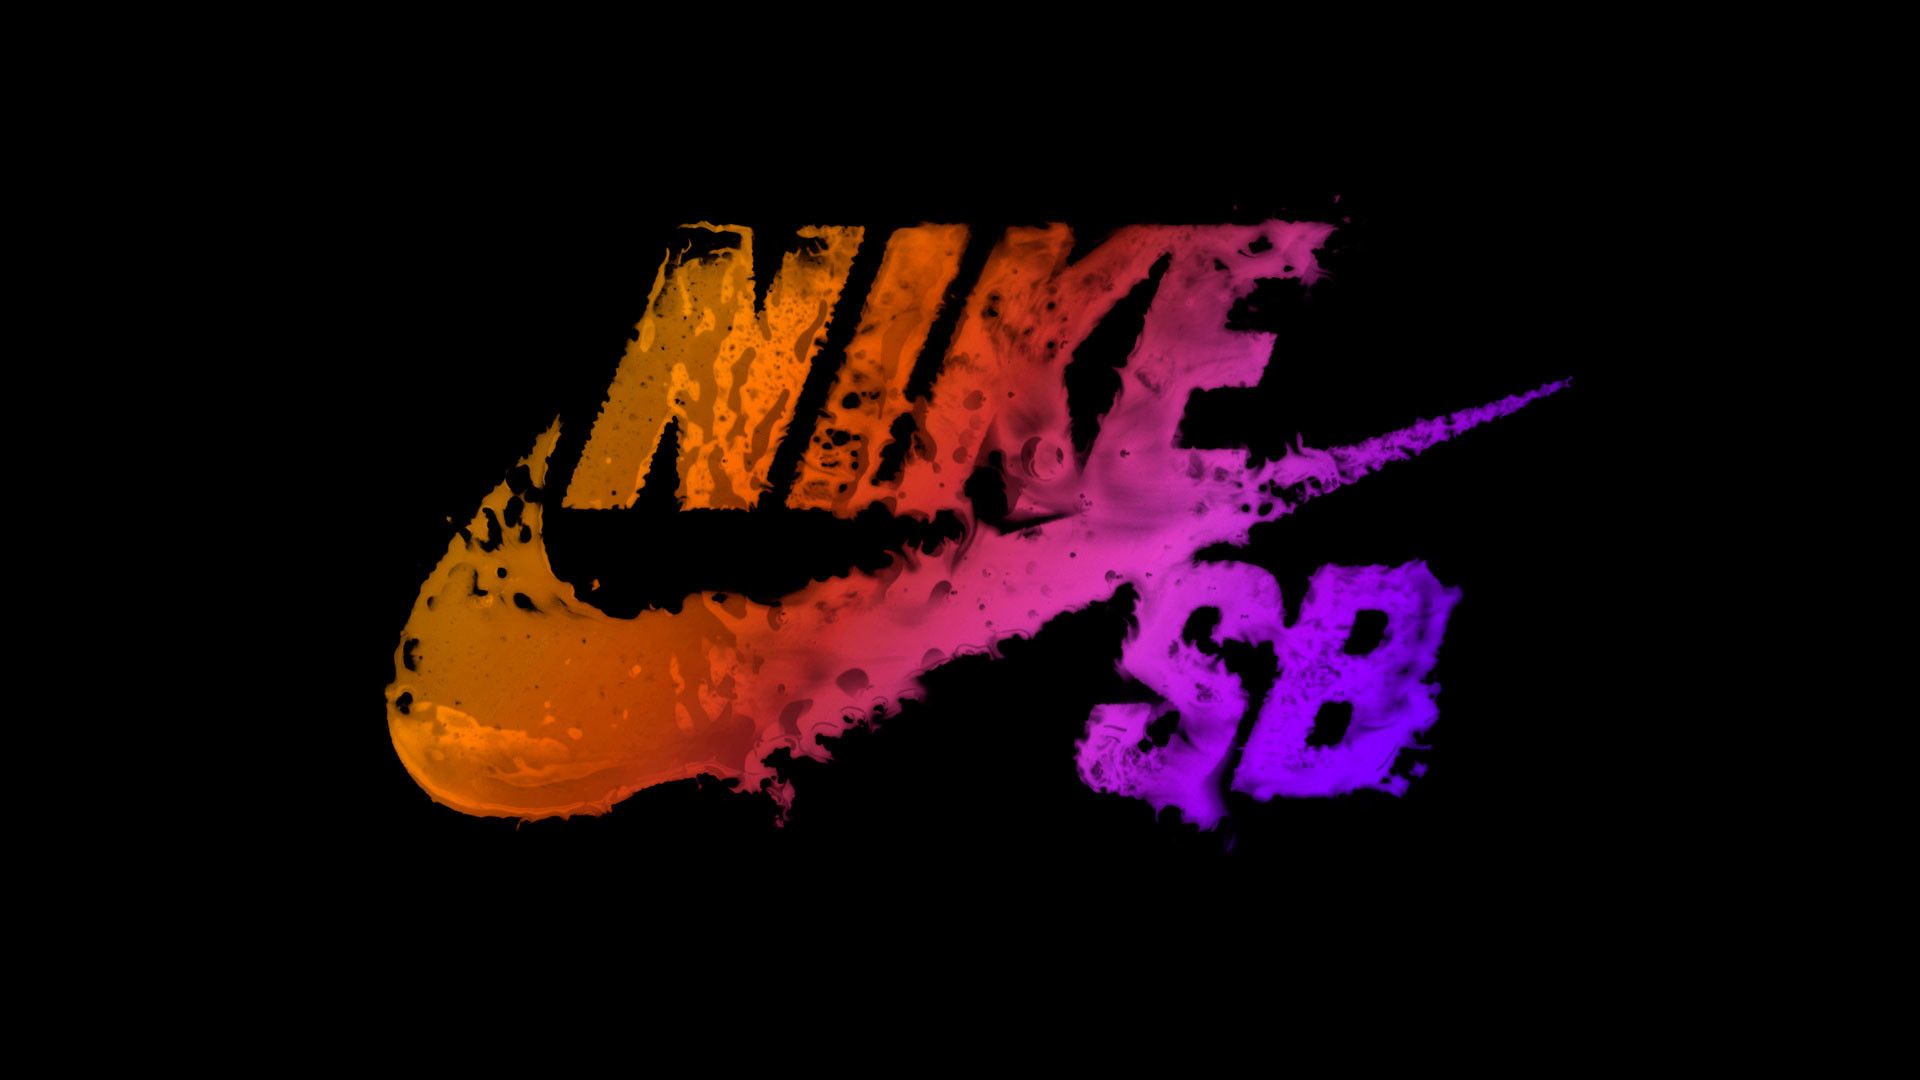 Nike Kobe Logo Wallpaper HD